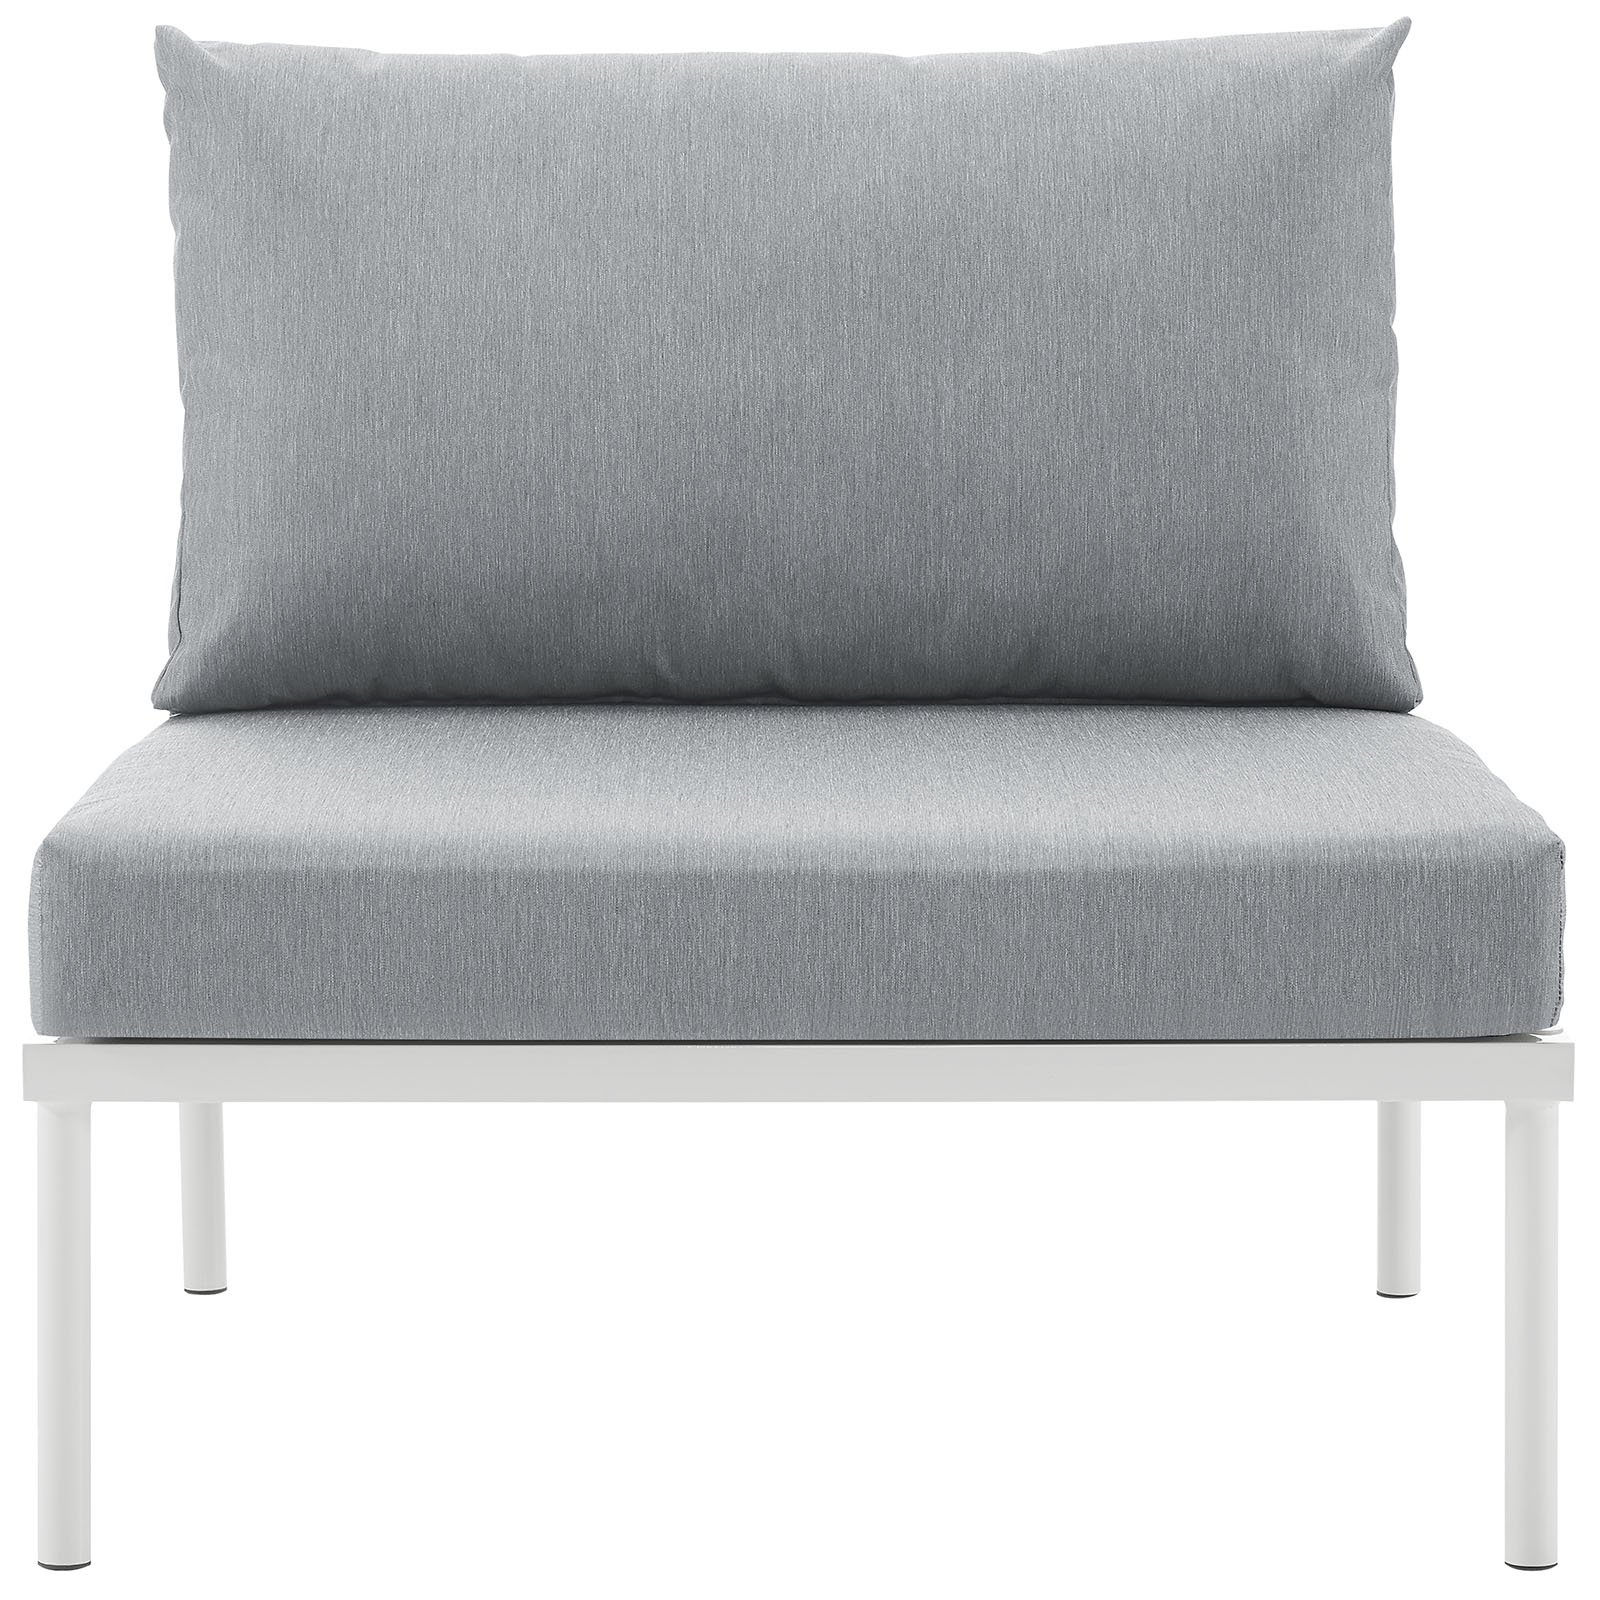 Modern Contemporary Urban Design Outdoor Patio Balcony Lounge Chair, Grey White Gray, Rattan - image 5 of 5